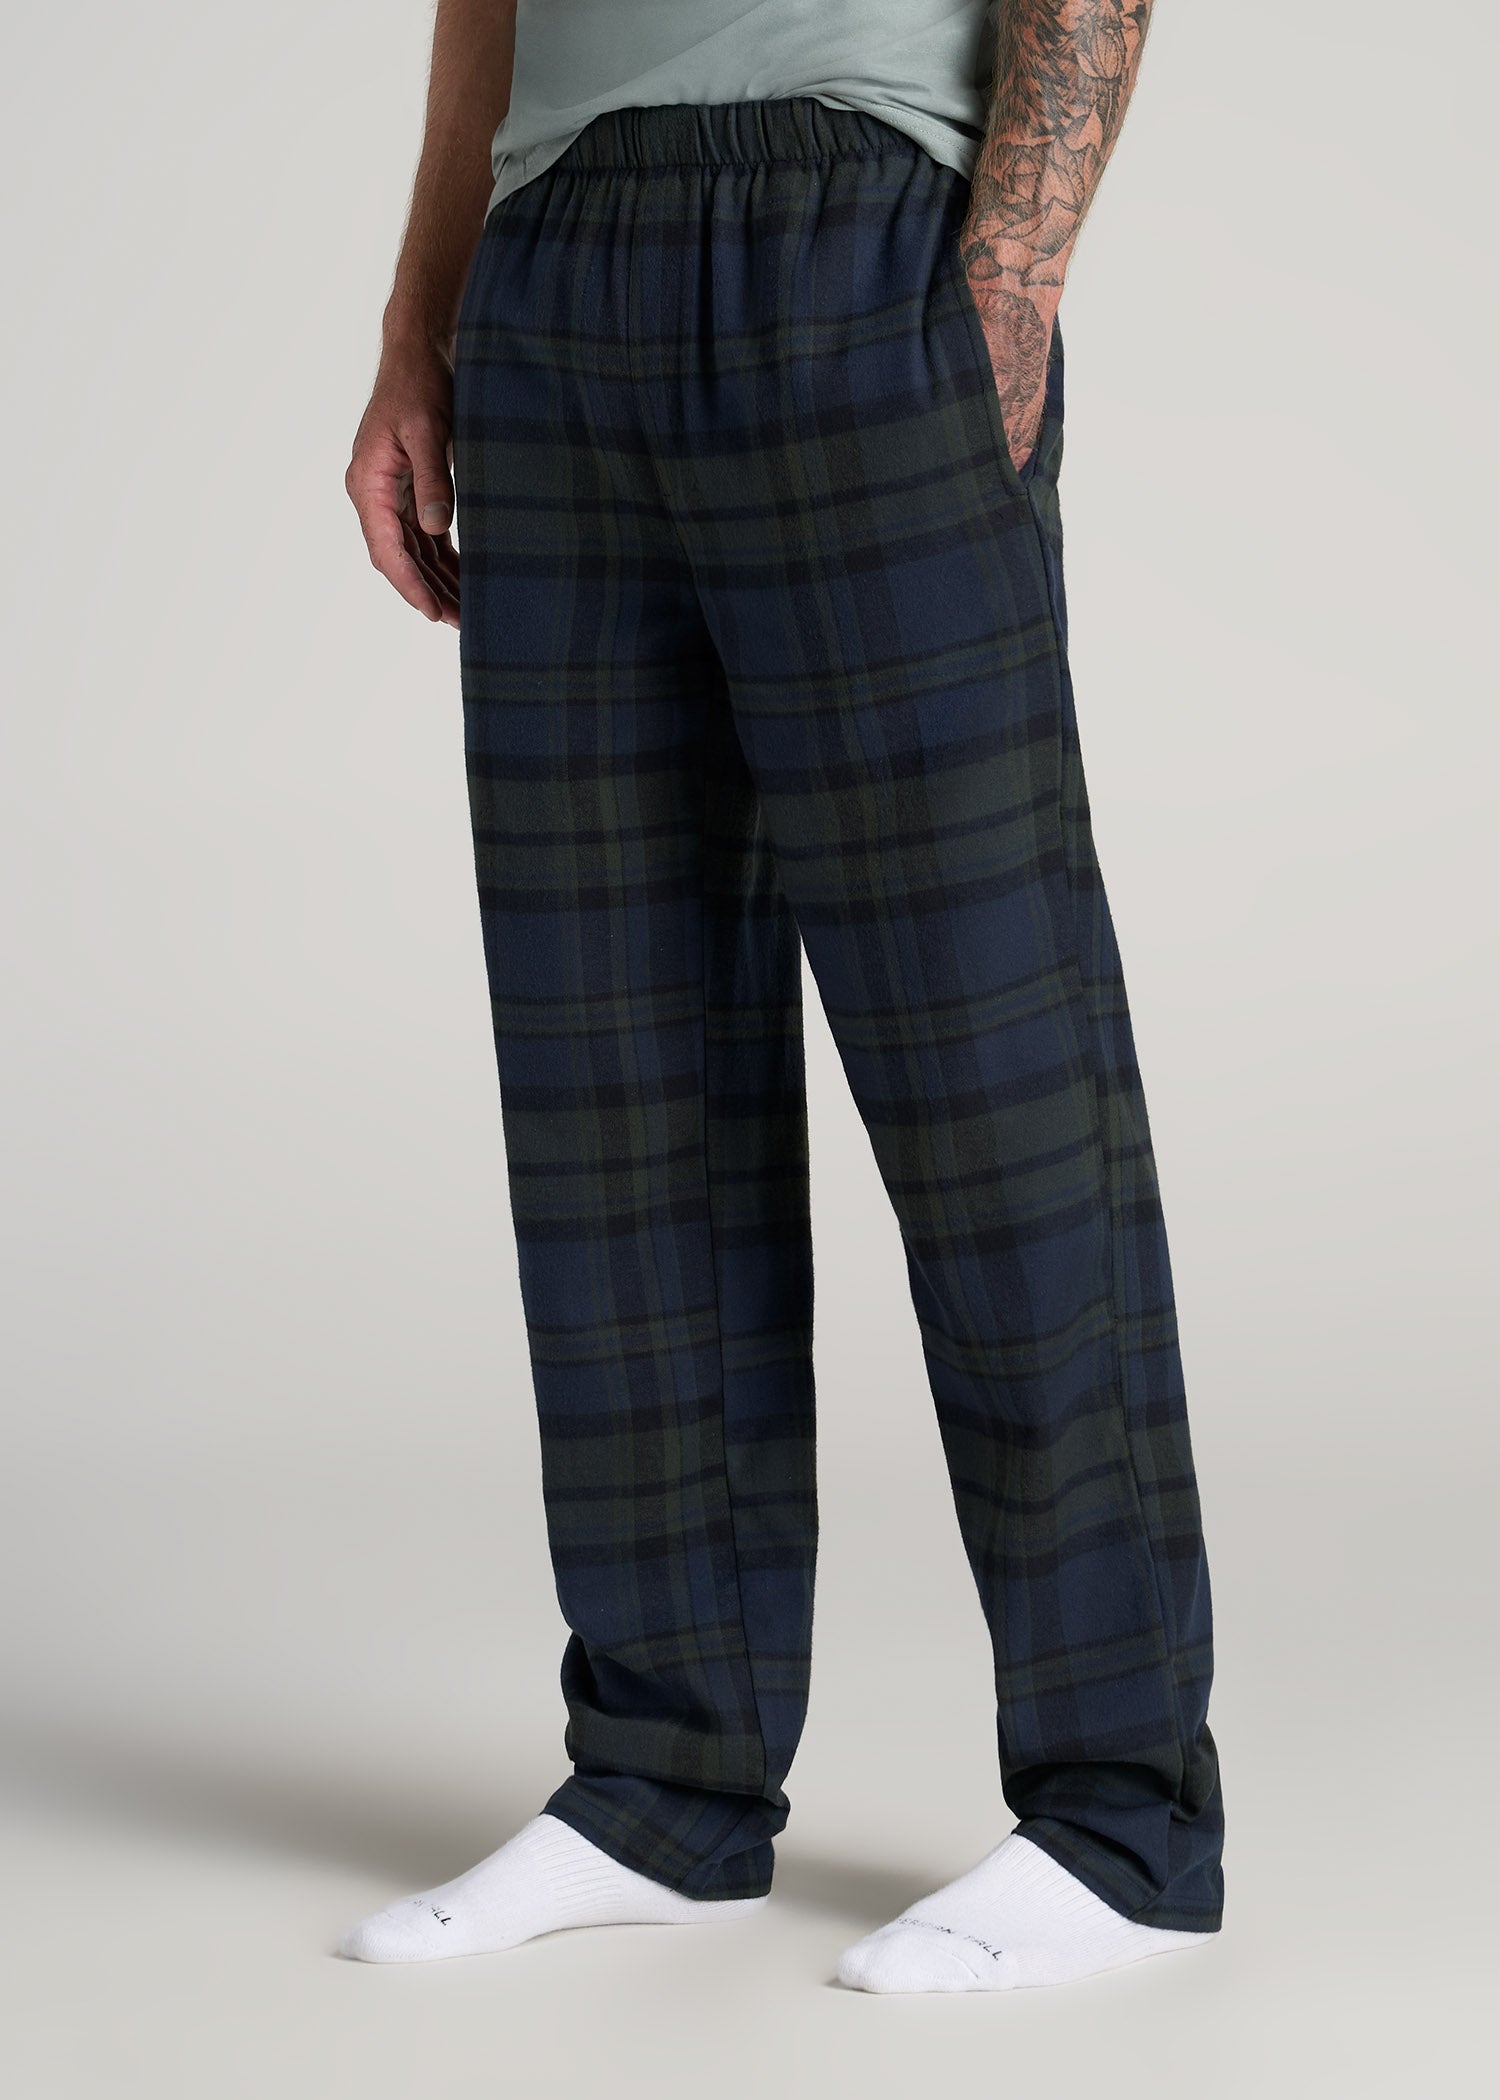 EVERDREAM Sleepwear Mens Flannel Pajama Pants, Long 100% Cotton Pj Bottoms,  Rusty Brown Plaid, 3XL price in Saudi Arabia | Amazon Saudi Arabia | kanbkam